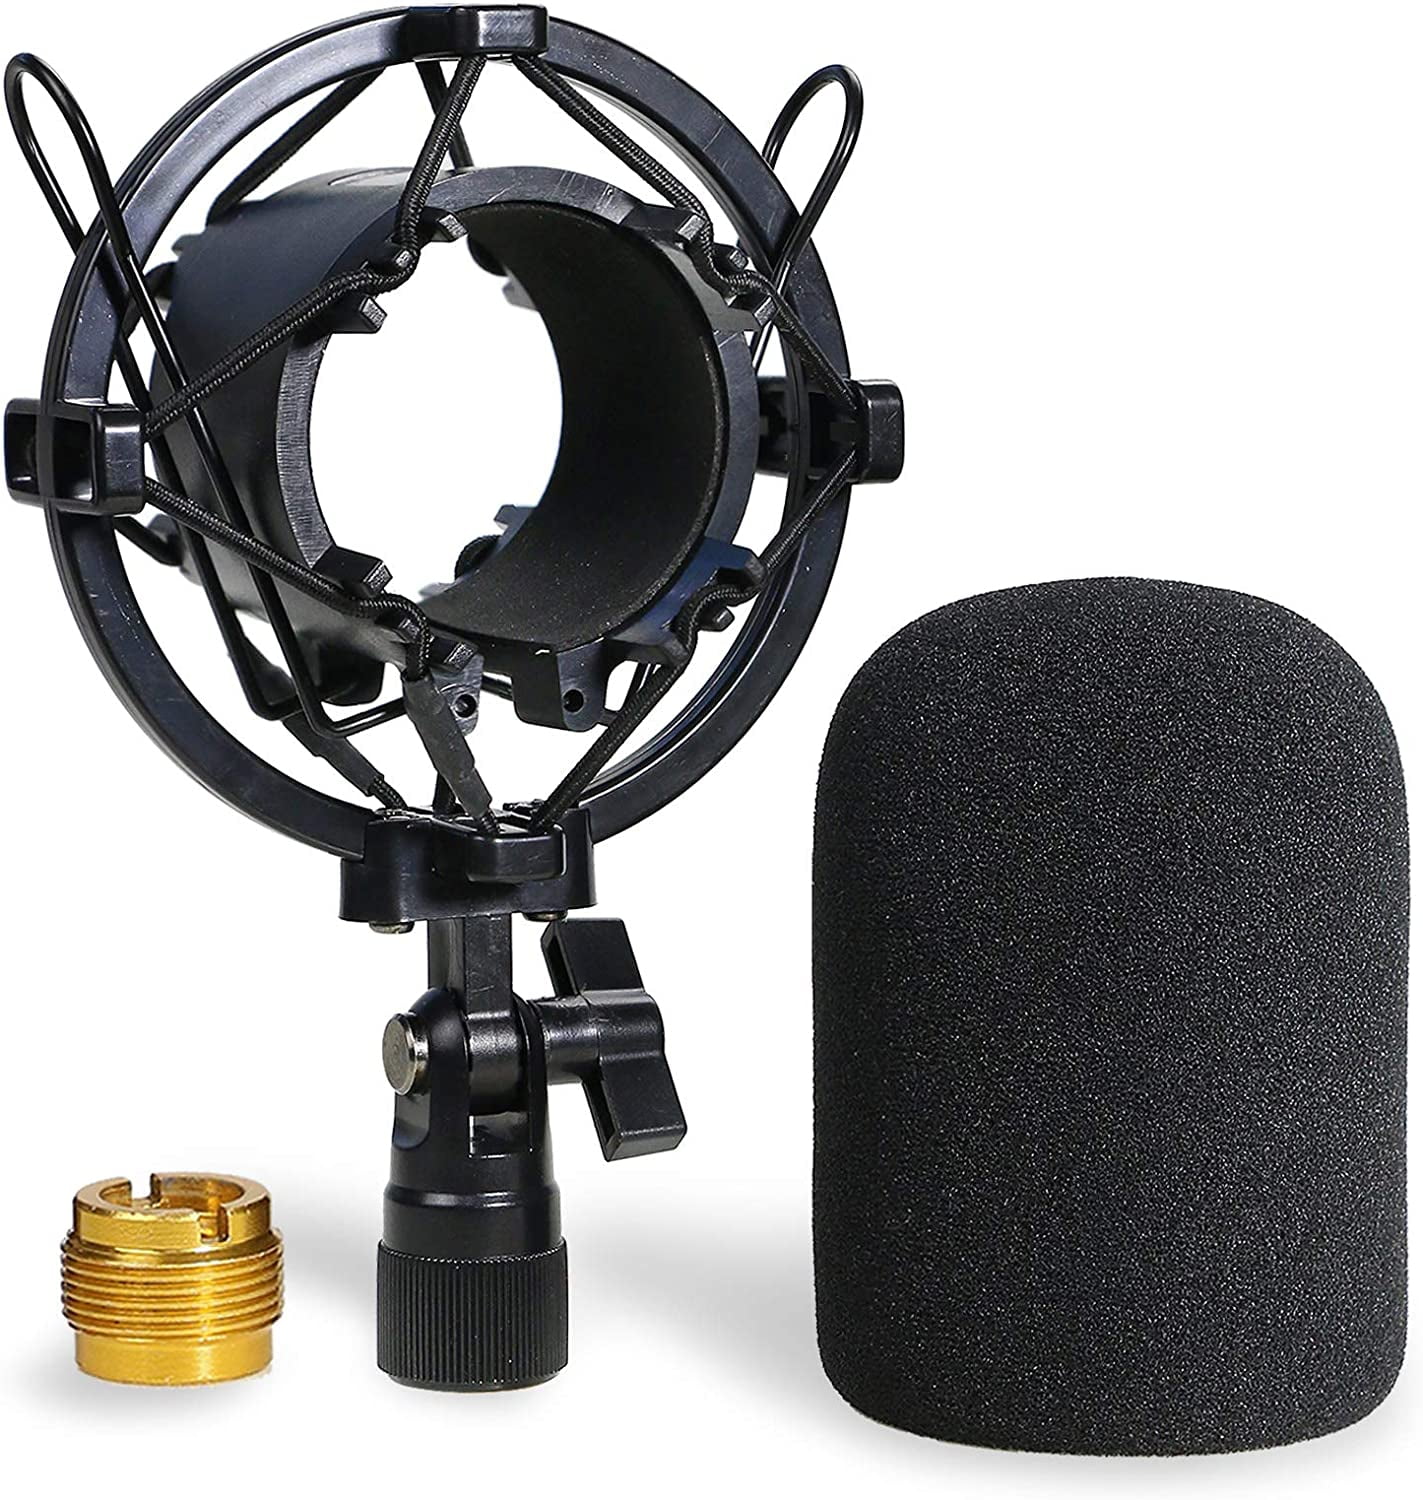 AT2020 Desktop Microphone Stand with Shock Mount & Foam Windscreen